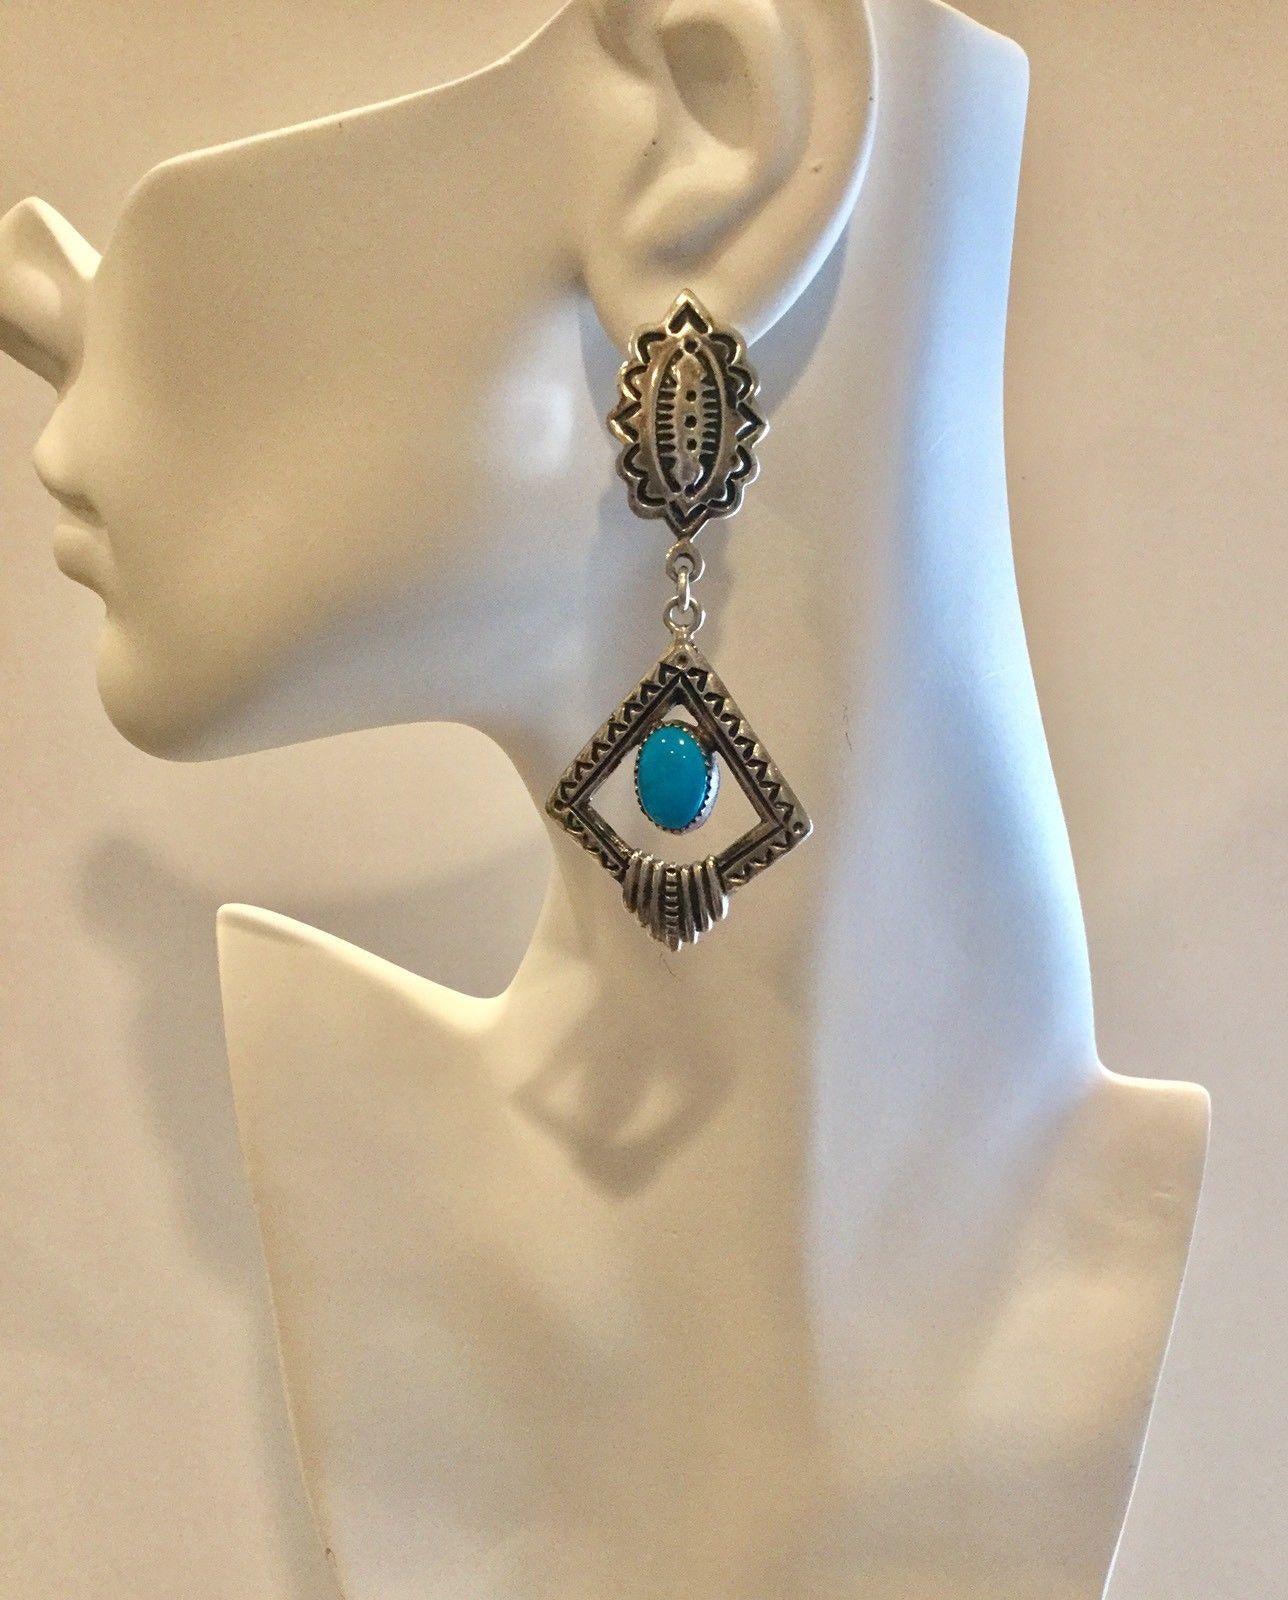 Native American Navajo Randall Tom sterling silver turquoise dangle earrings.

Marked: R.Tom, Sterling

Measures: 3